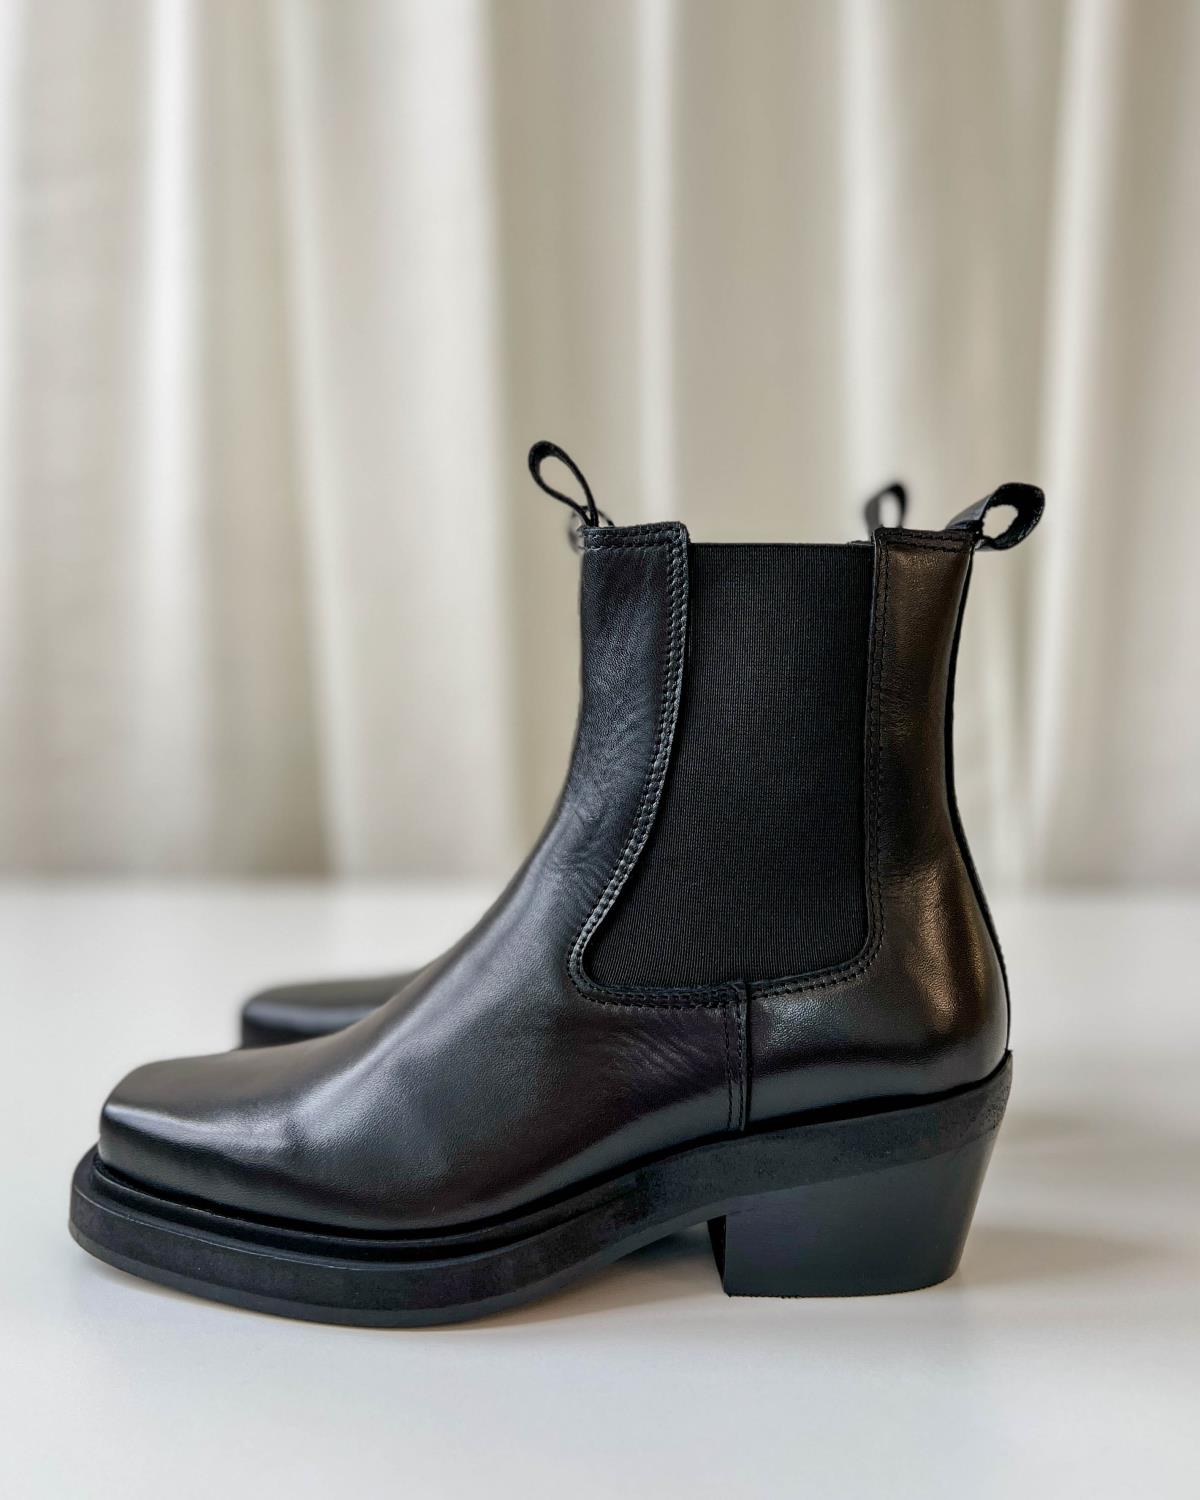 Dusty Boots Black - Pavement